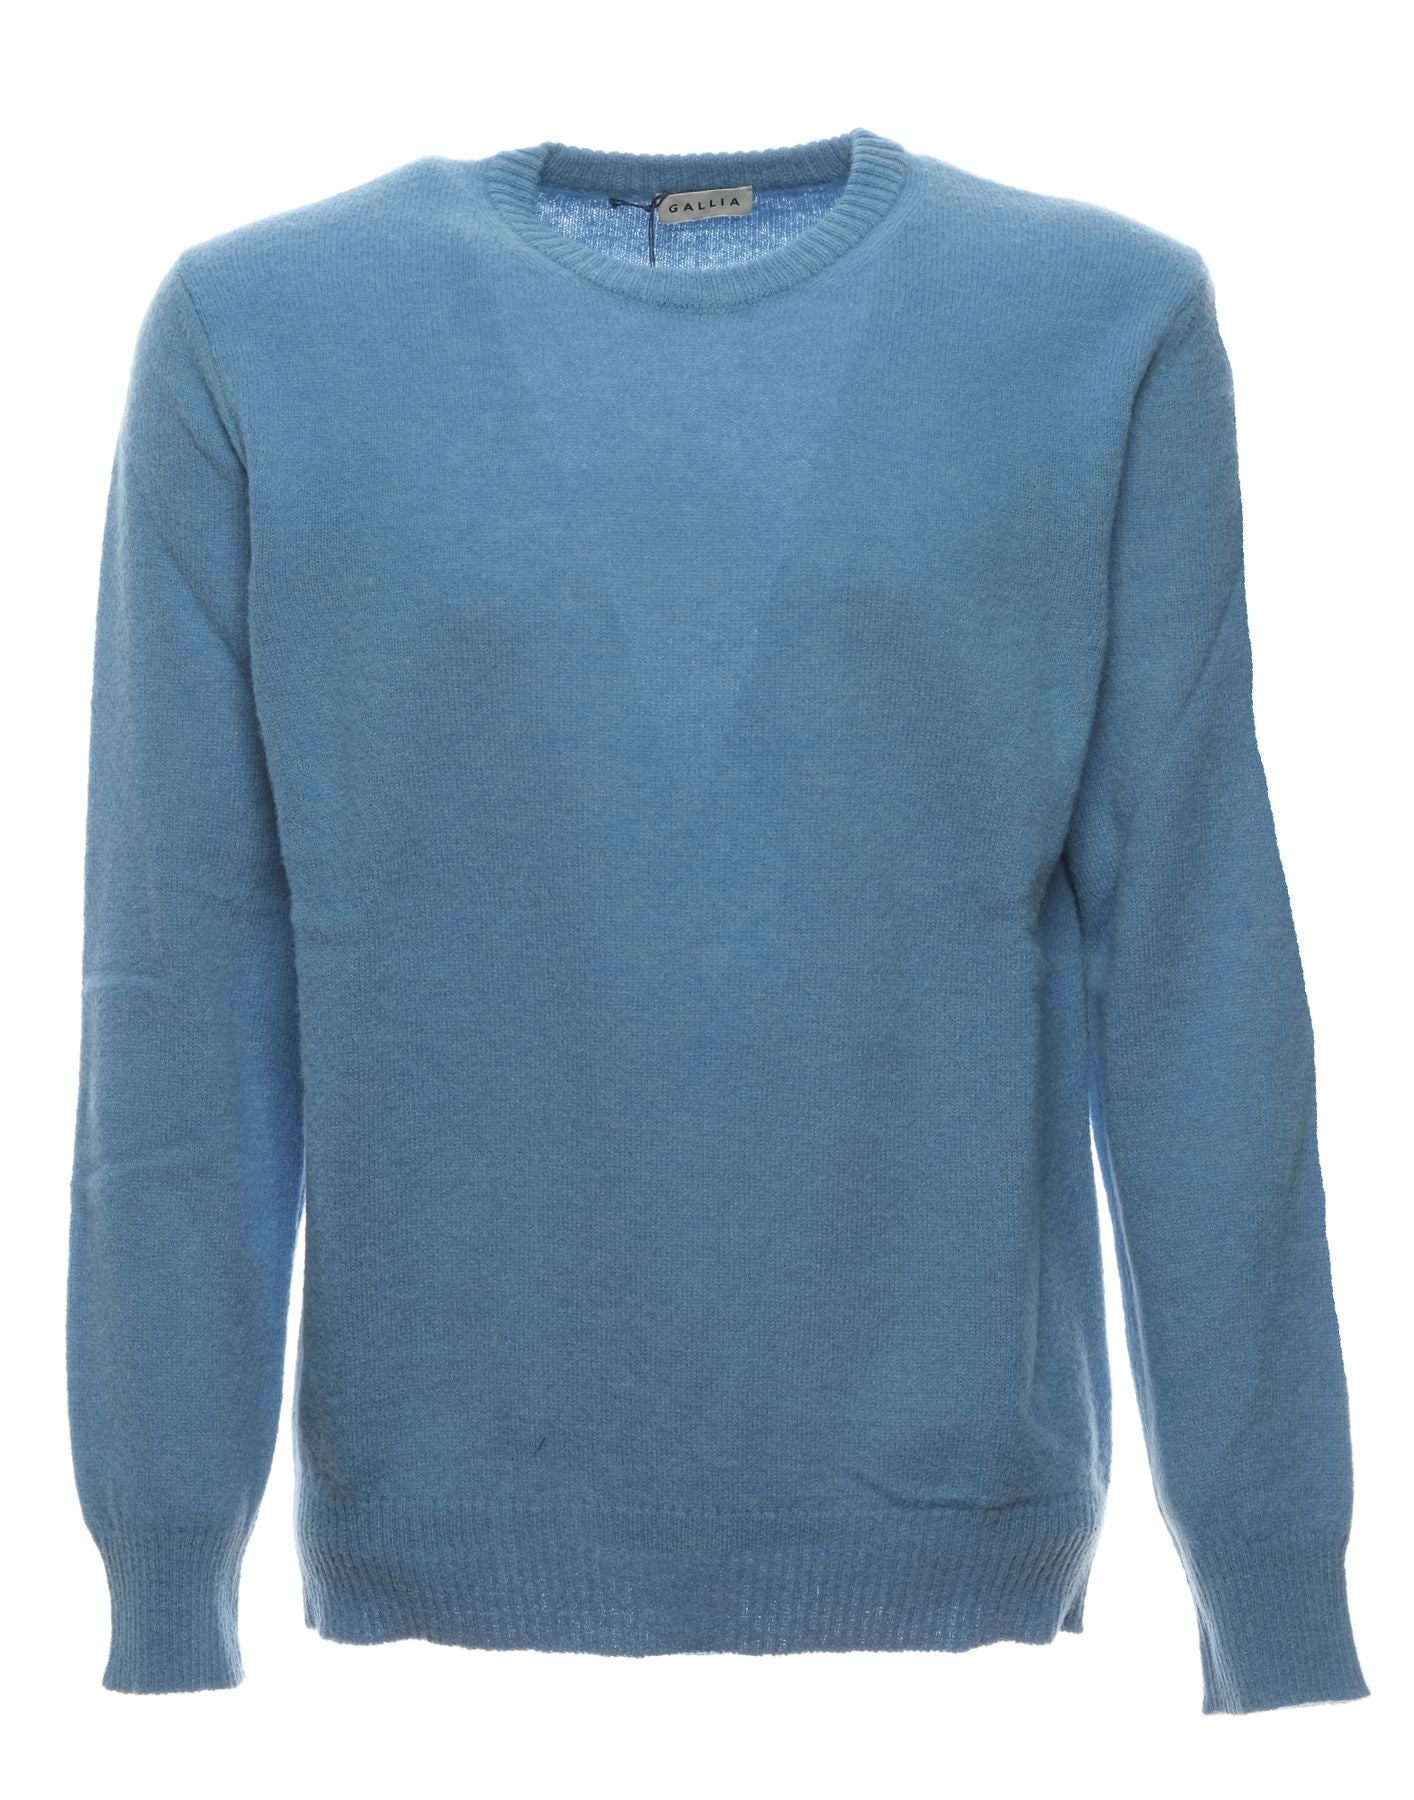 Sweater for men LM U7601 109 STEVE GALLIA